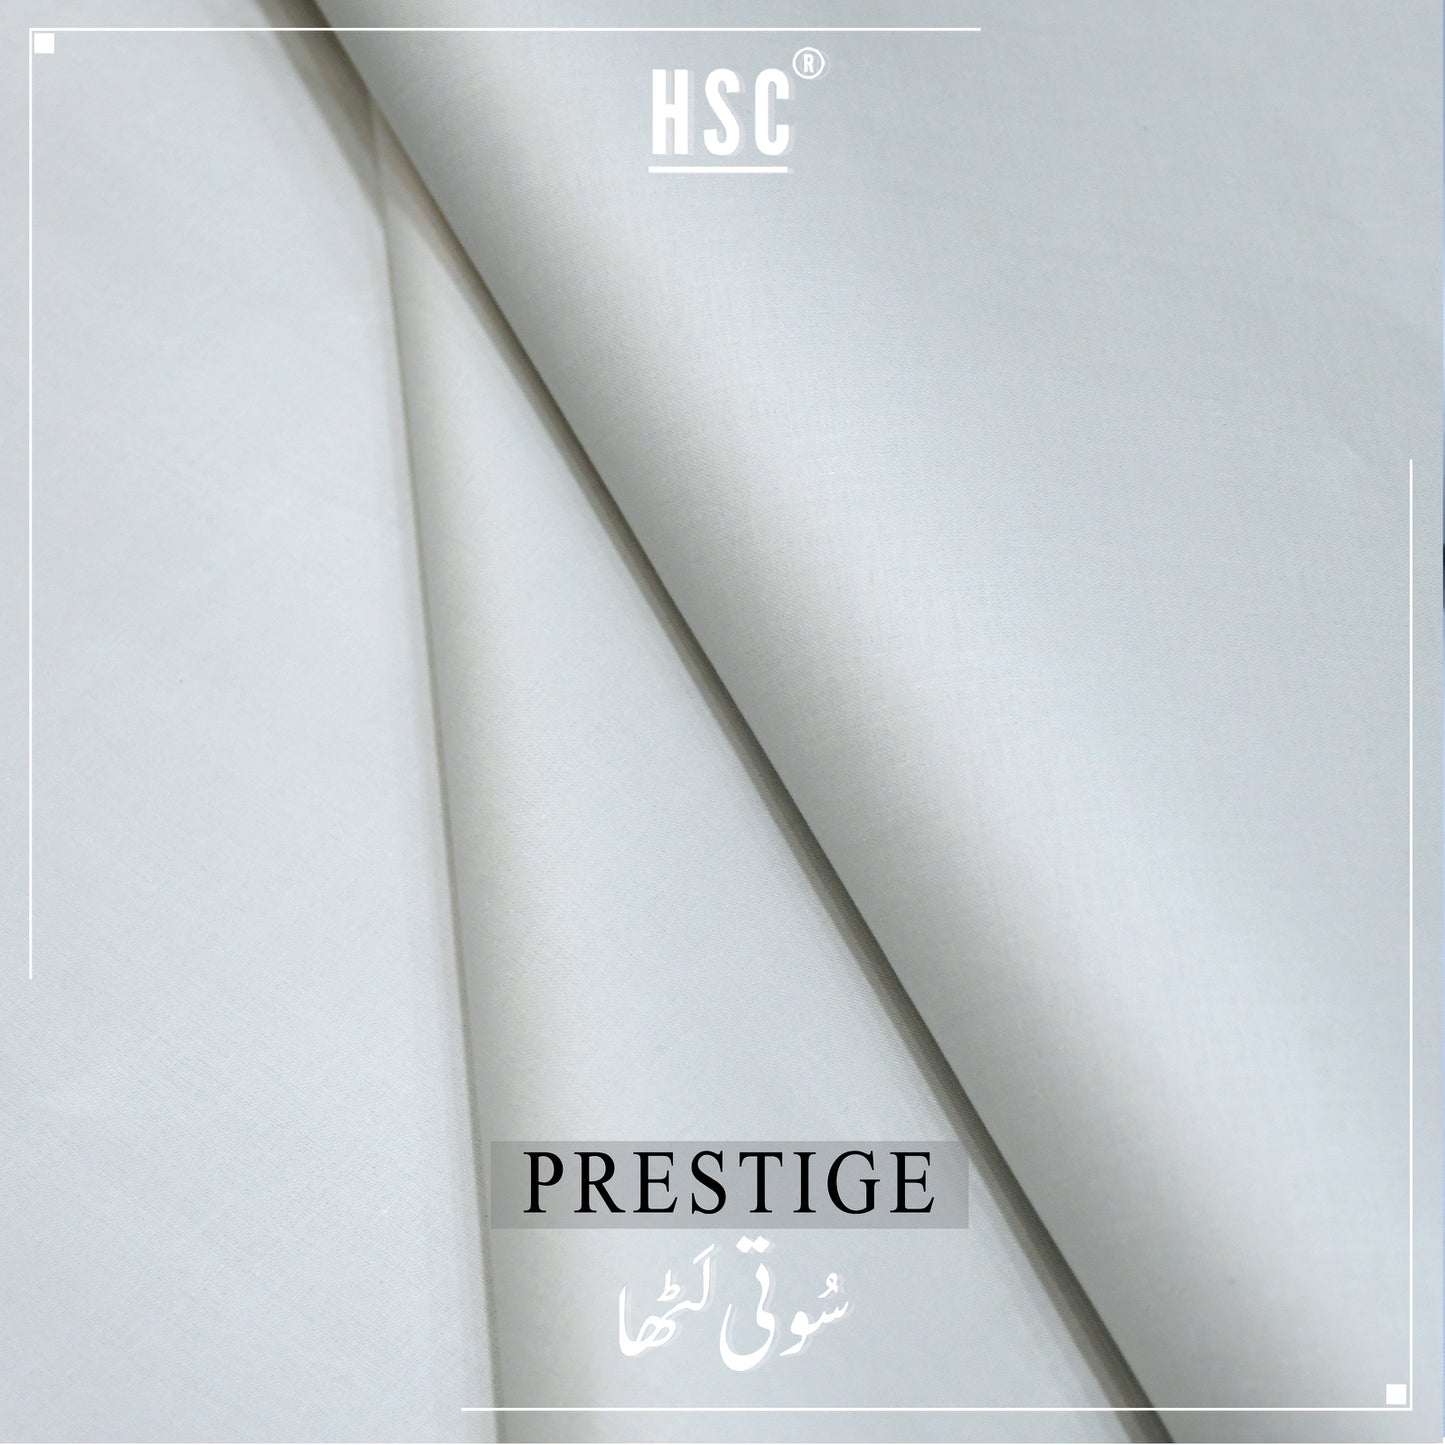 Buy1 Get 1 Free Prestige Pure Cotton Latha - SEL4 HSC